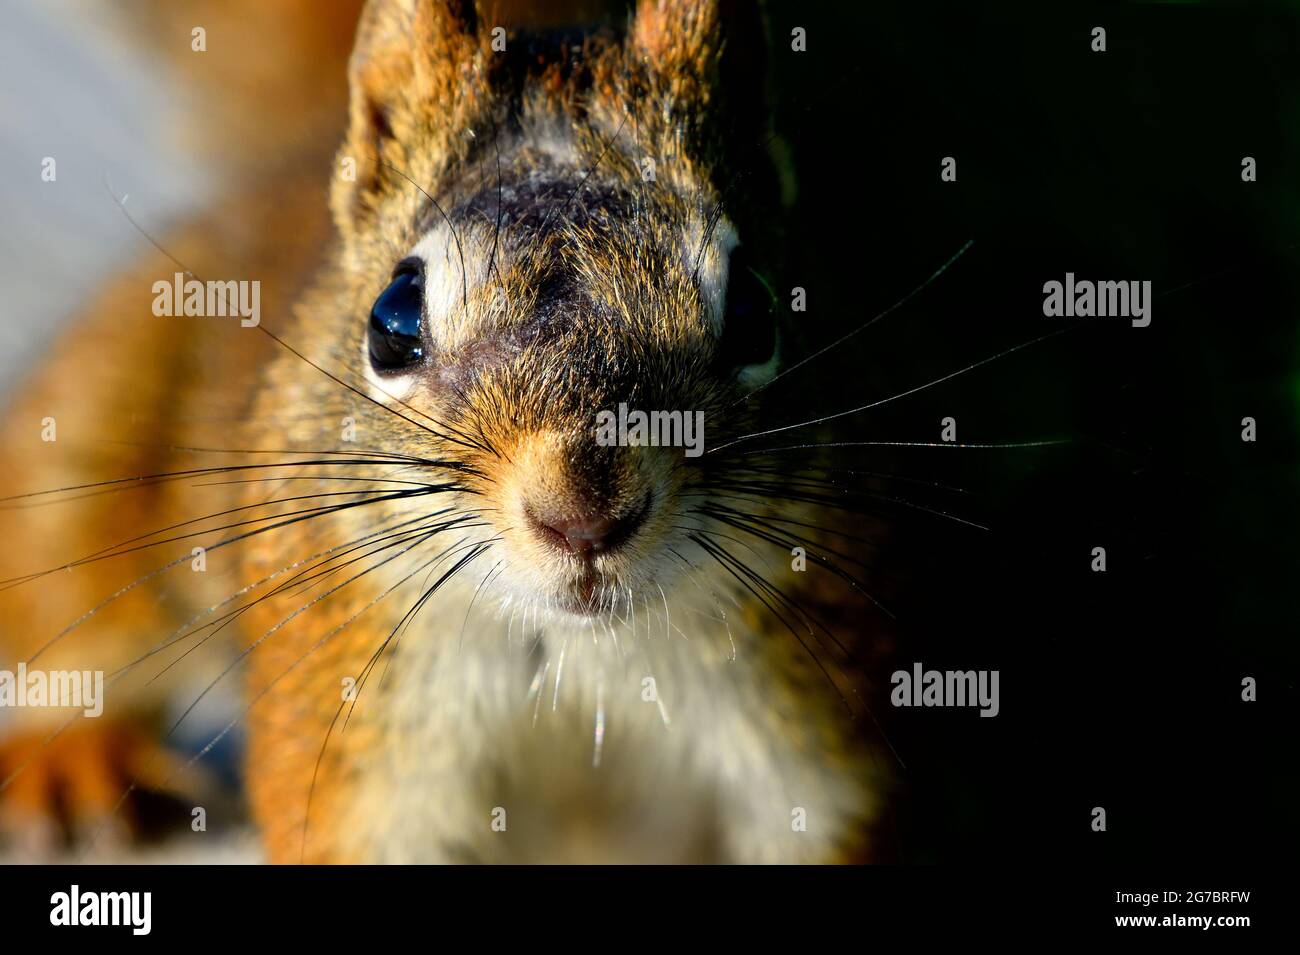 A young red squirrel "Tamiasciurus hudsonicus", close up portrait in rural Alberta Canada Stock Photo